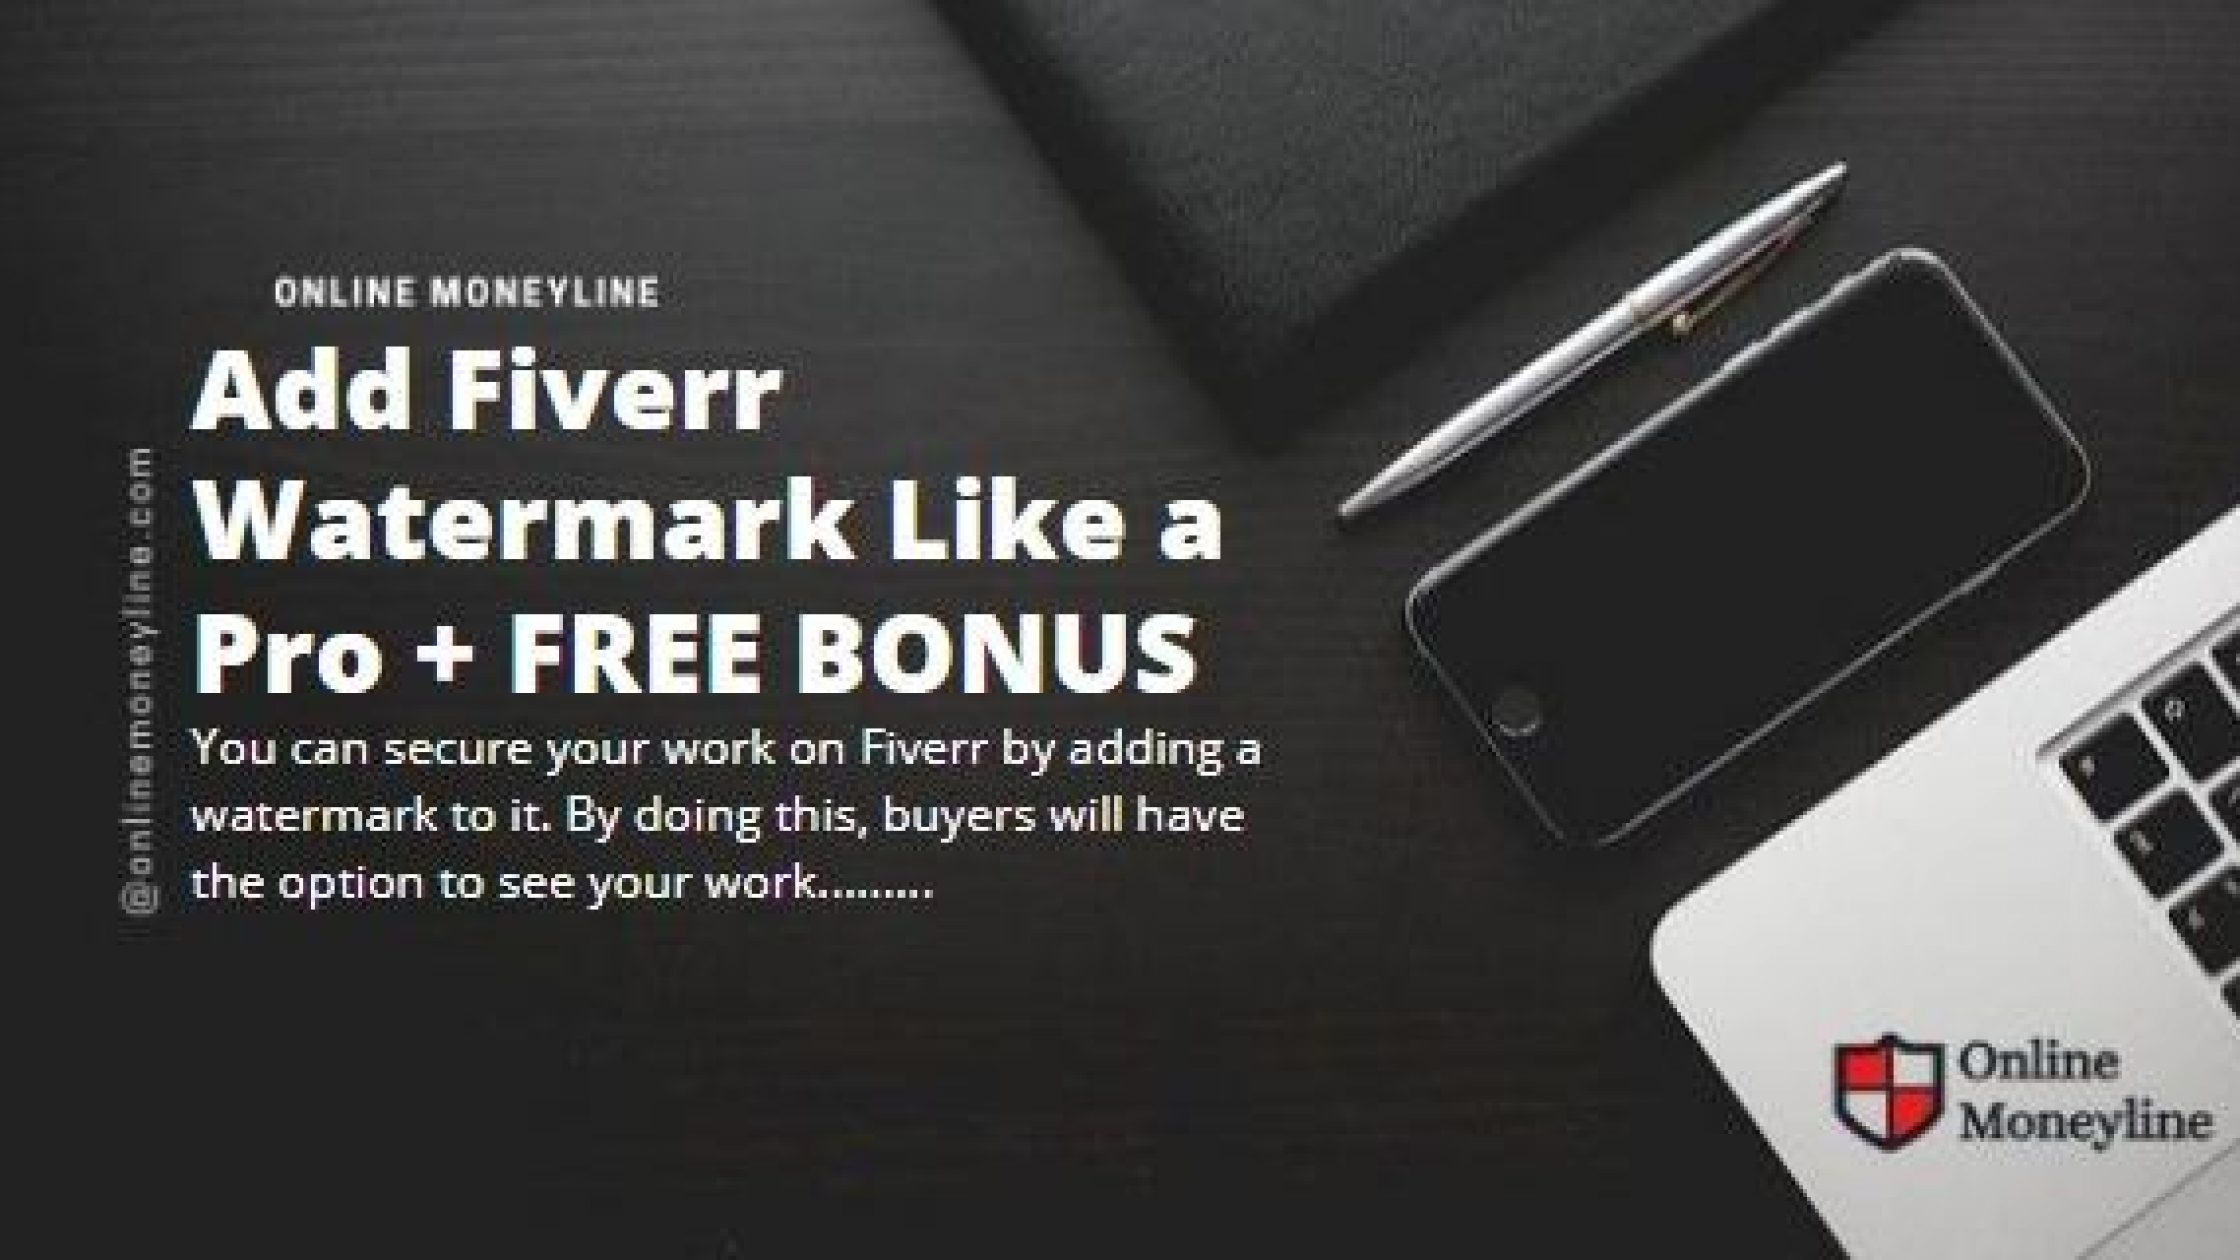 Add Fiverr Watermark Like a Pro + FREE BONUS